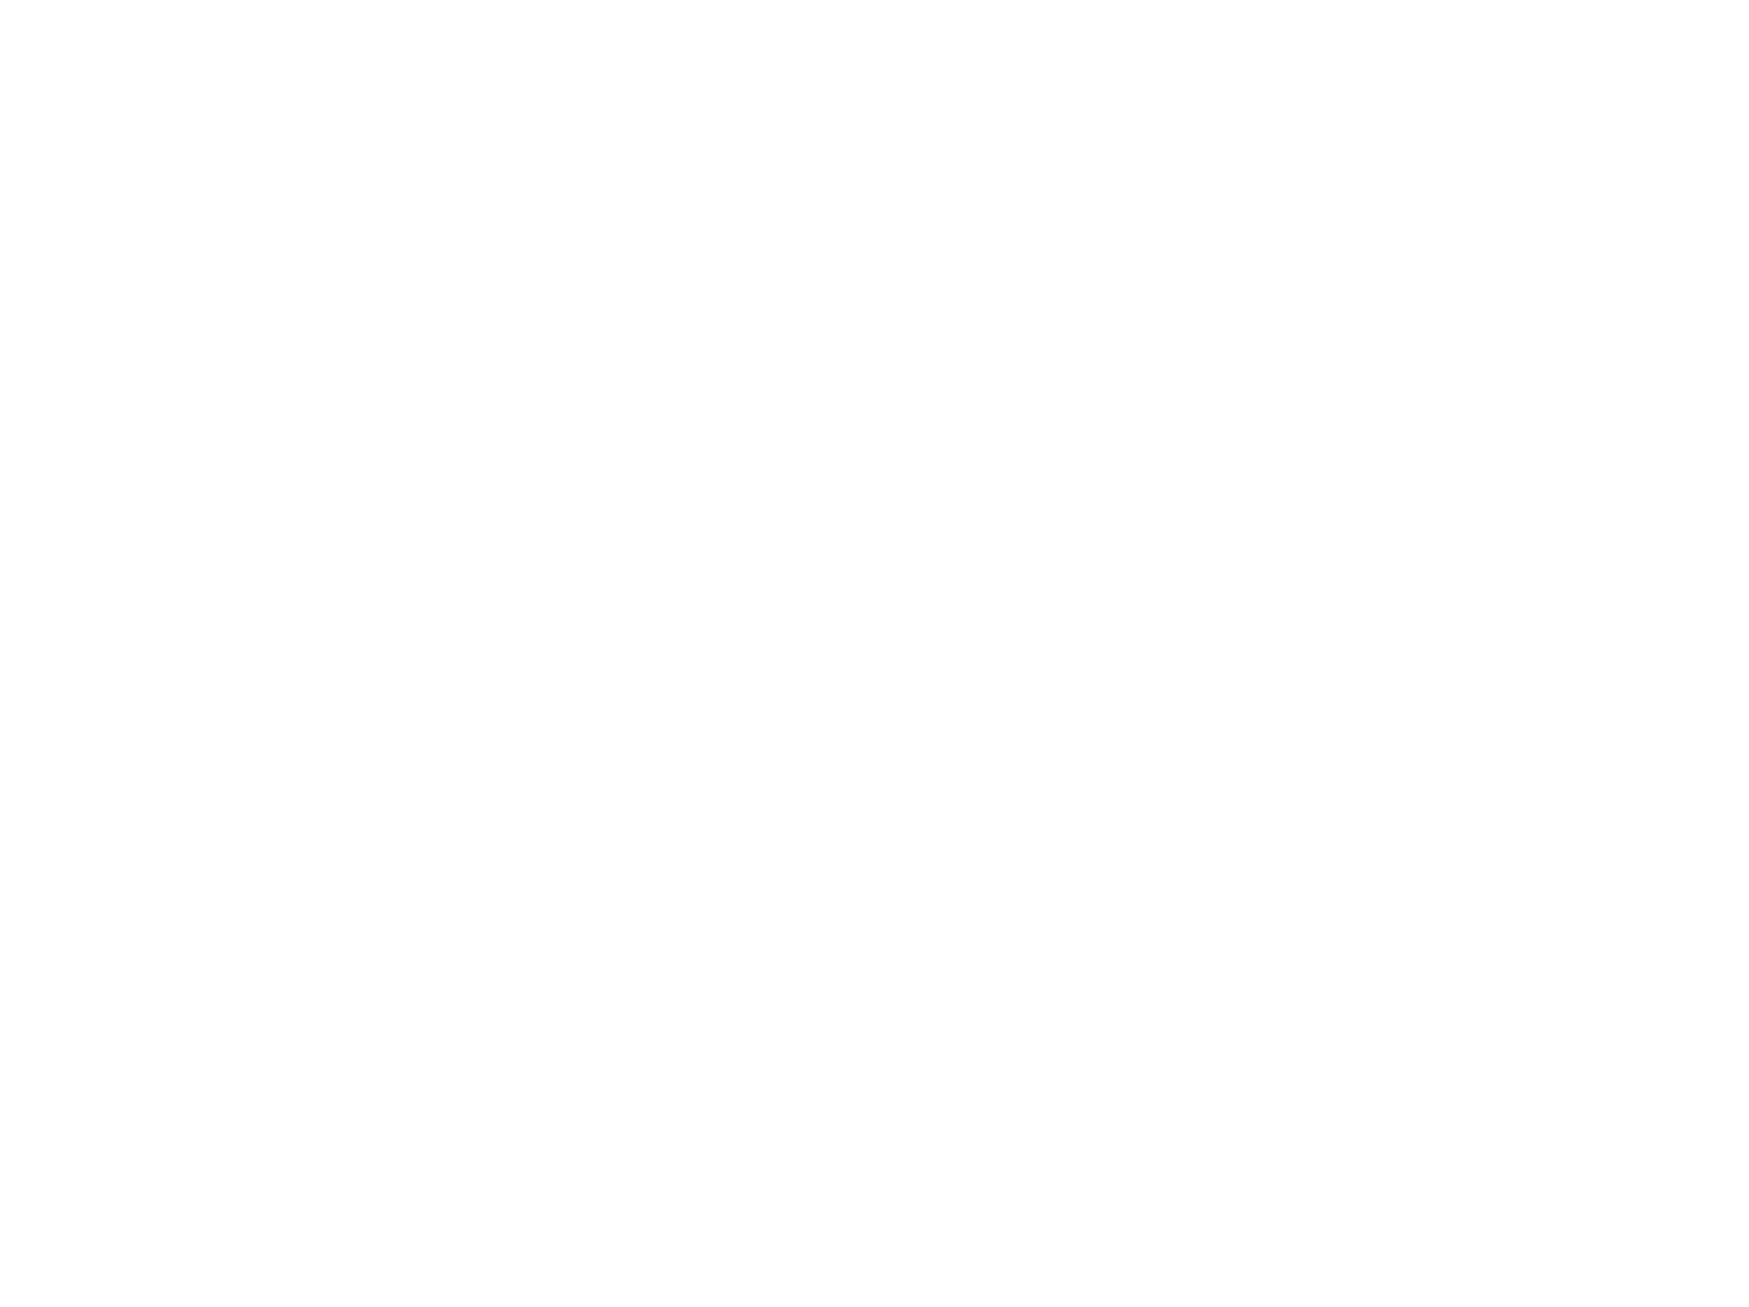 Michelangelo's Sistine Chapel: Albuquerque City Exhibit